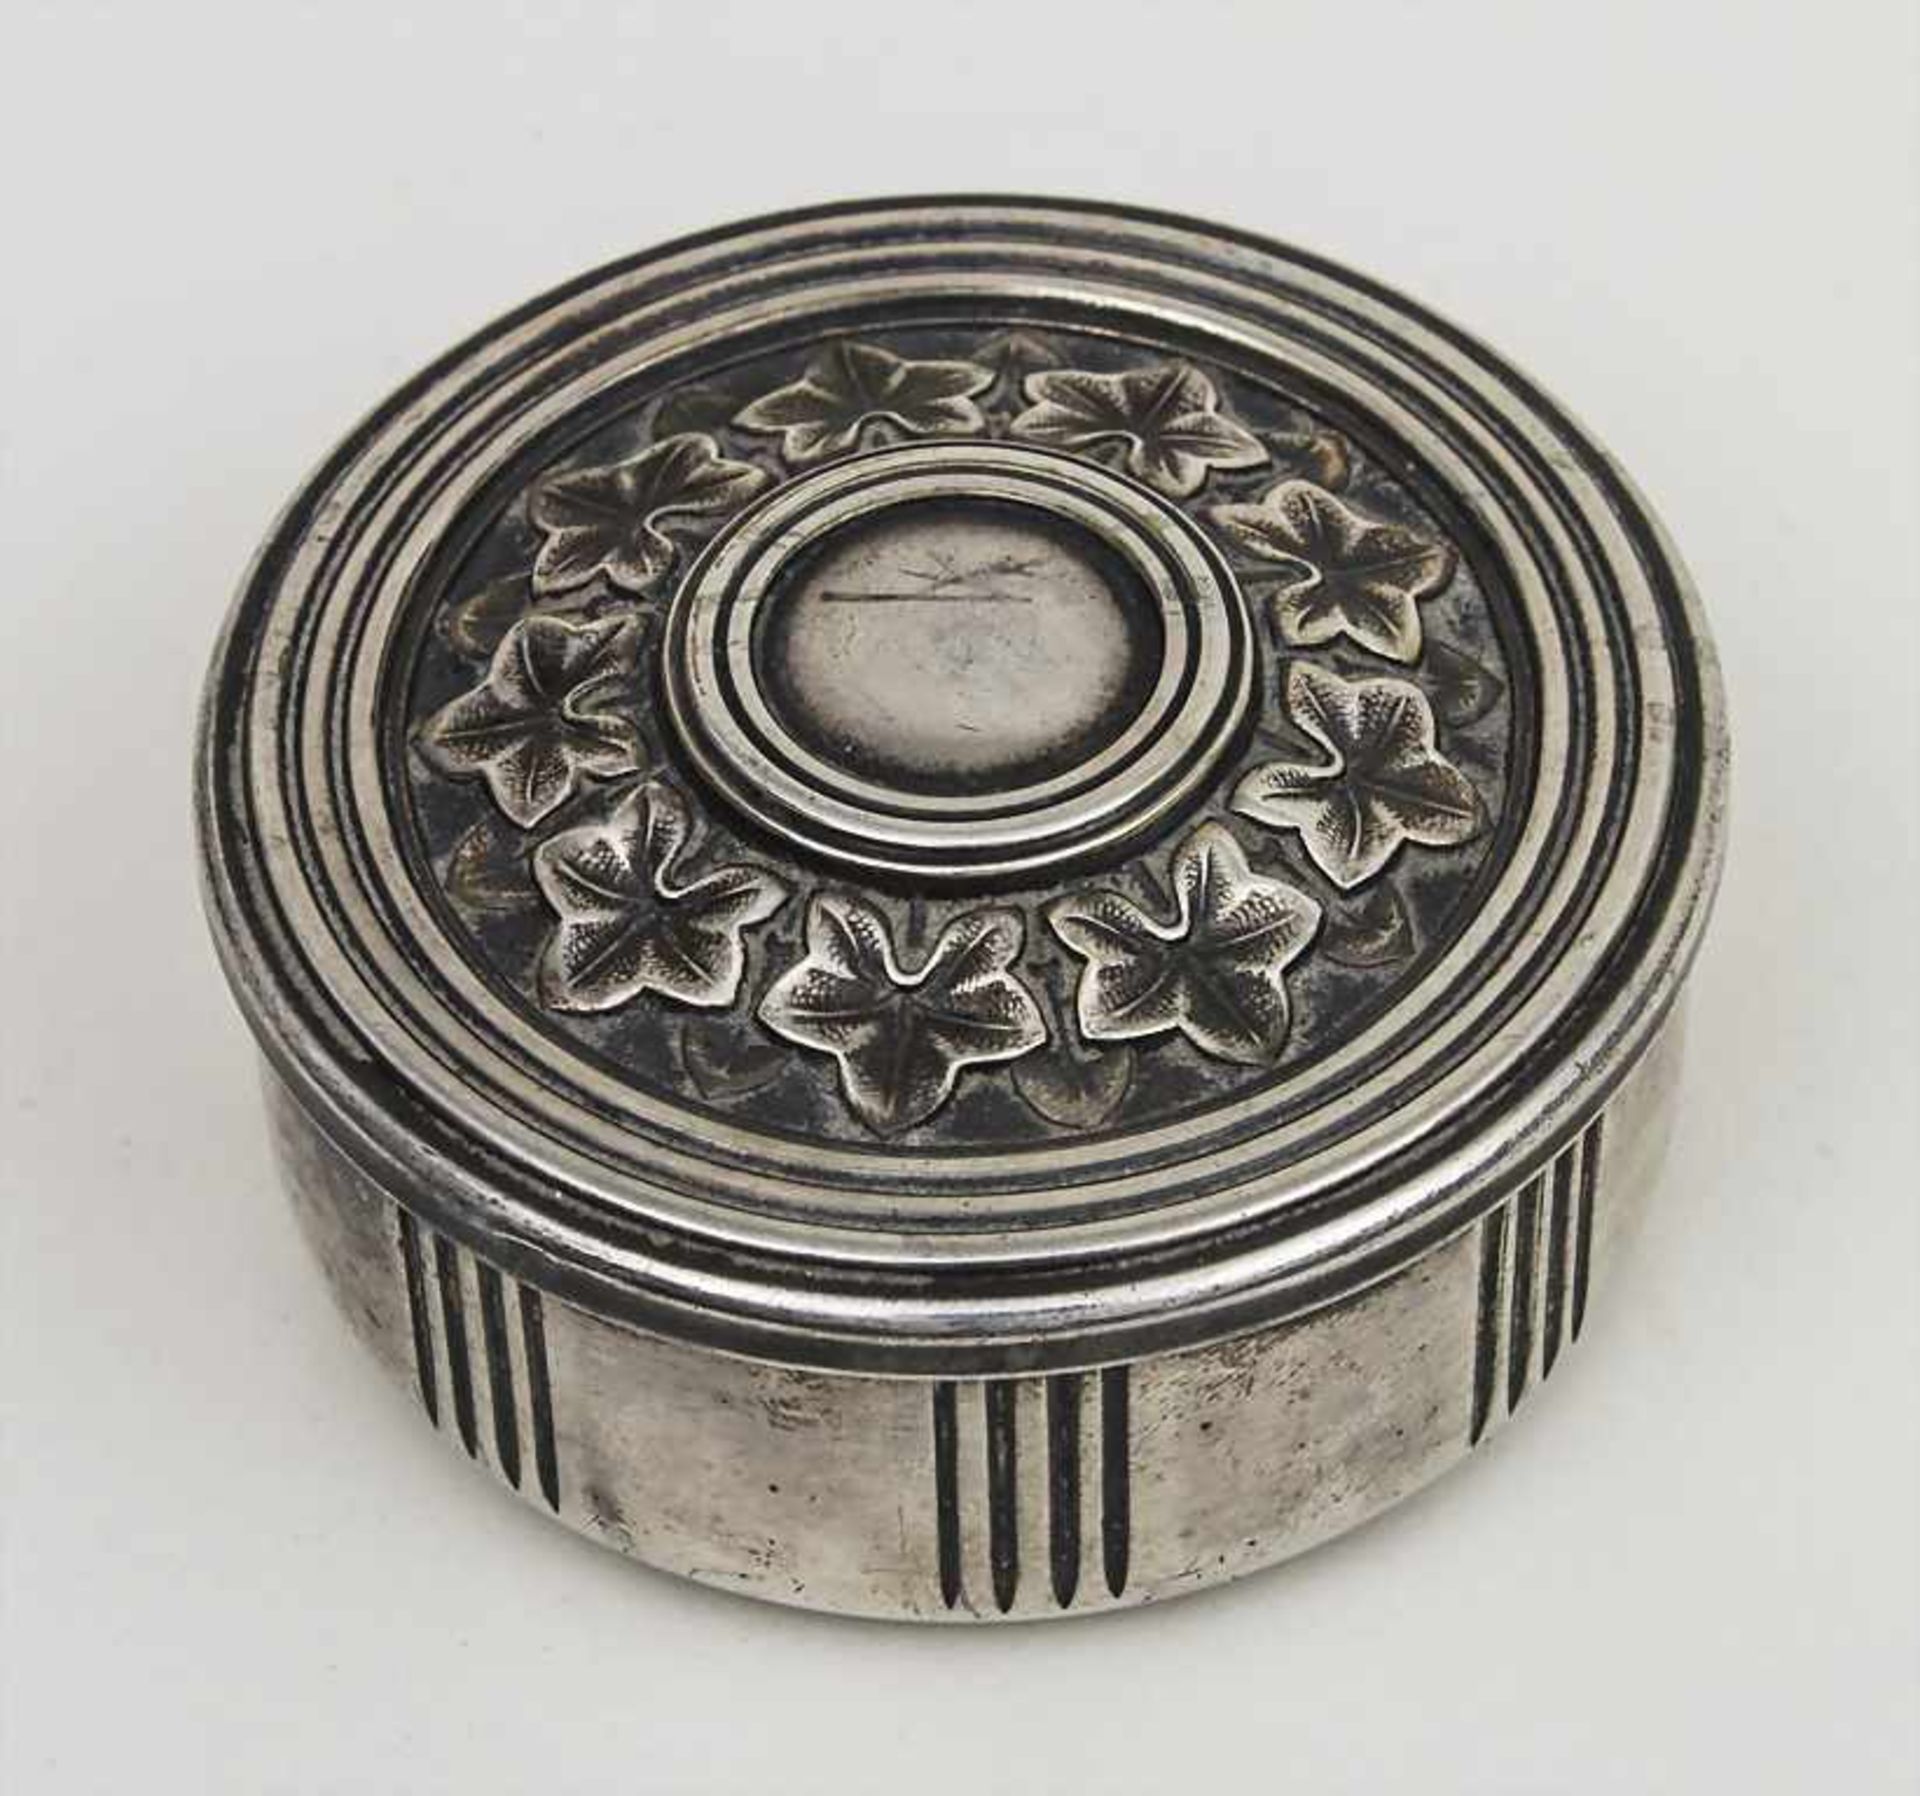 Jugendstil Puderdose / An Art Nouveau powder compact, Christofle, um 1920 Material: Metall,